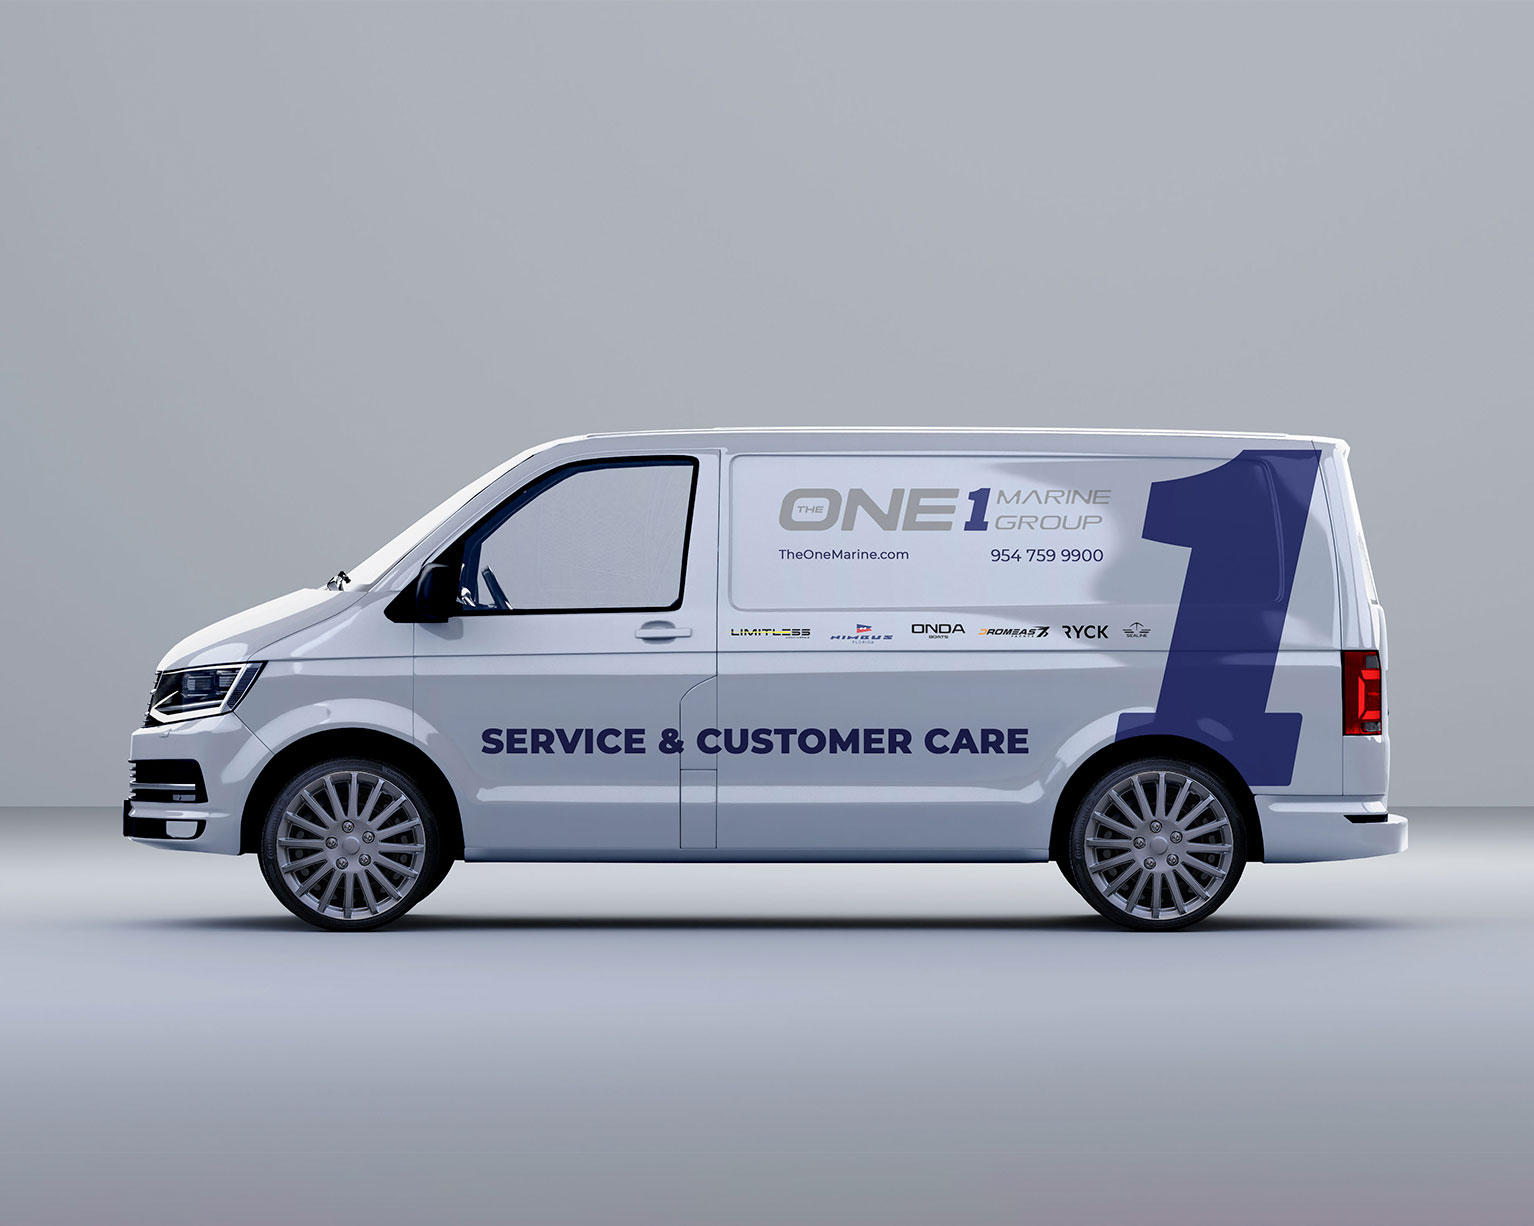 Customer Care and Service